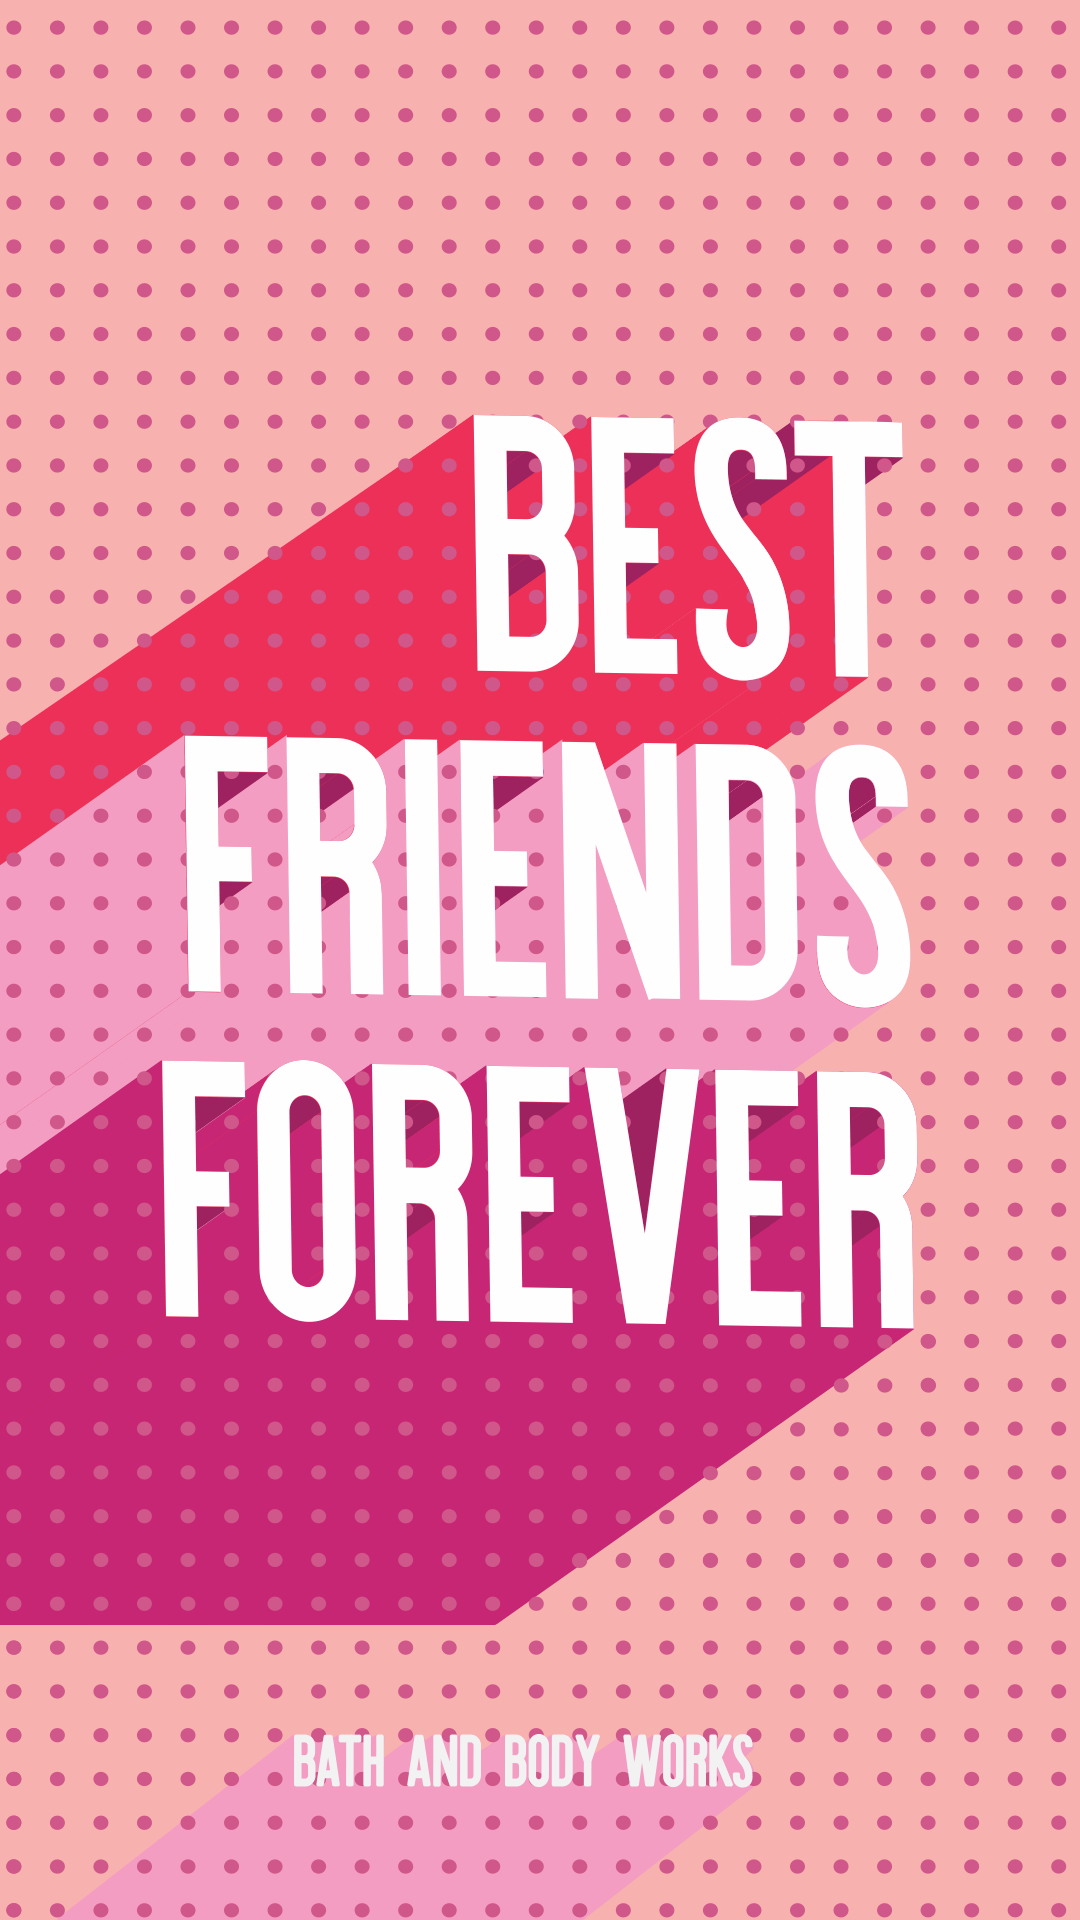 Best Friends Forever iPhone Wallpaper. Best friend wallpaper, Friends forever, Best friends forever